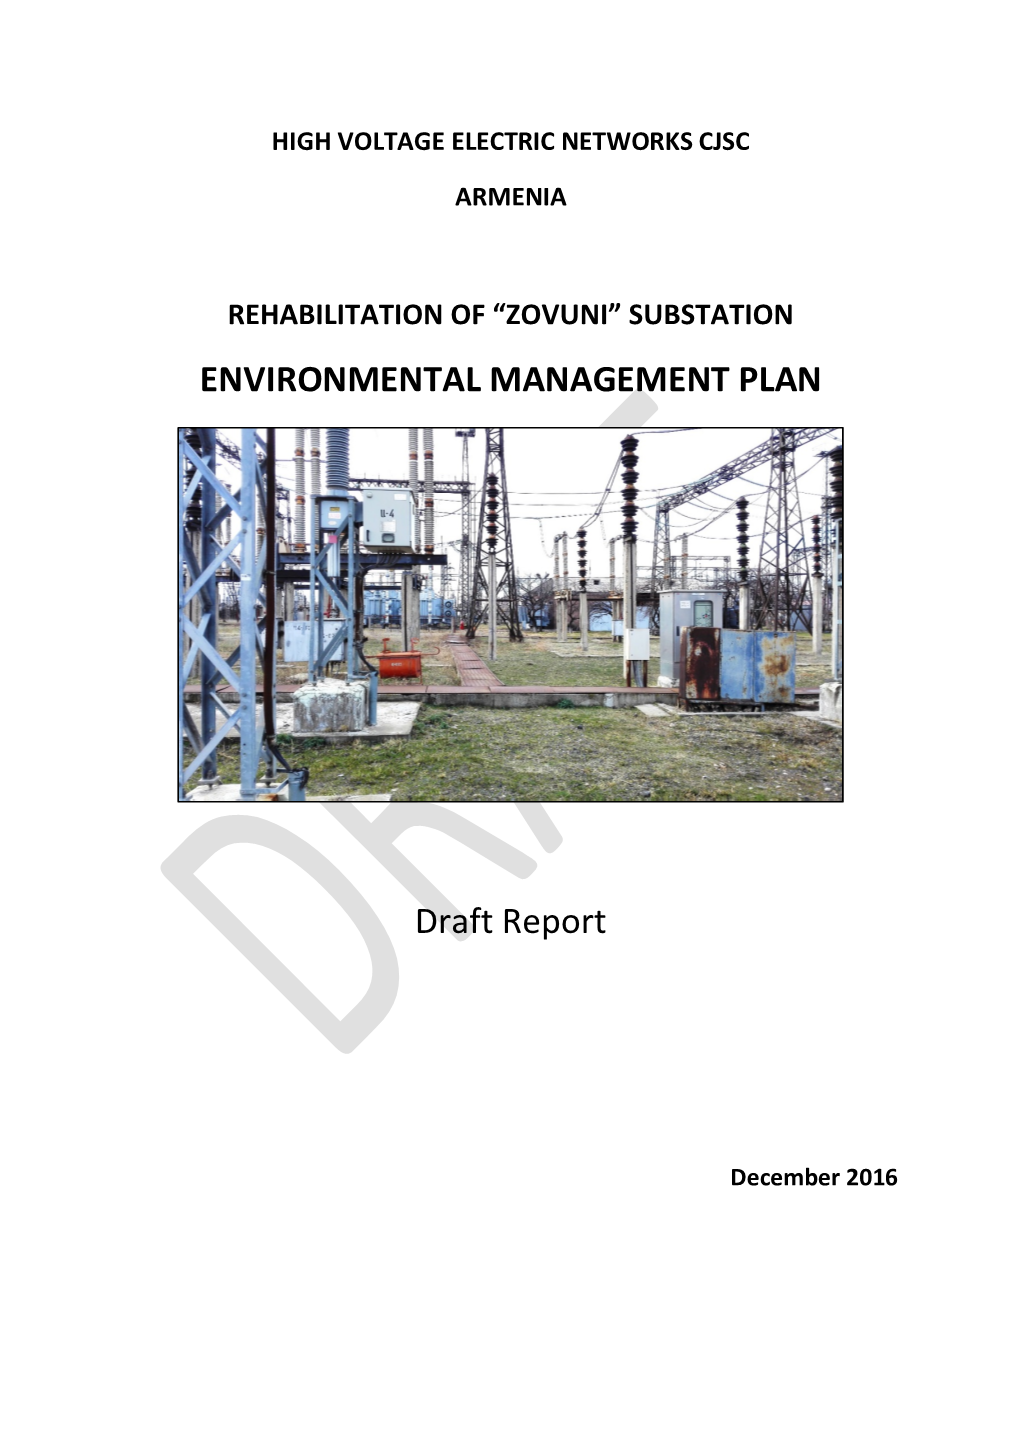 Substation Environmental Management Plan